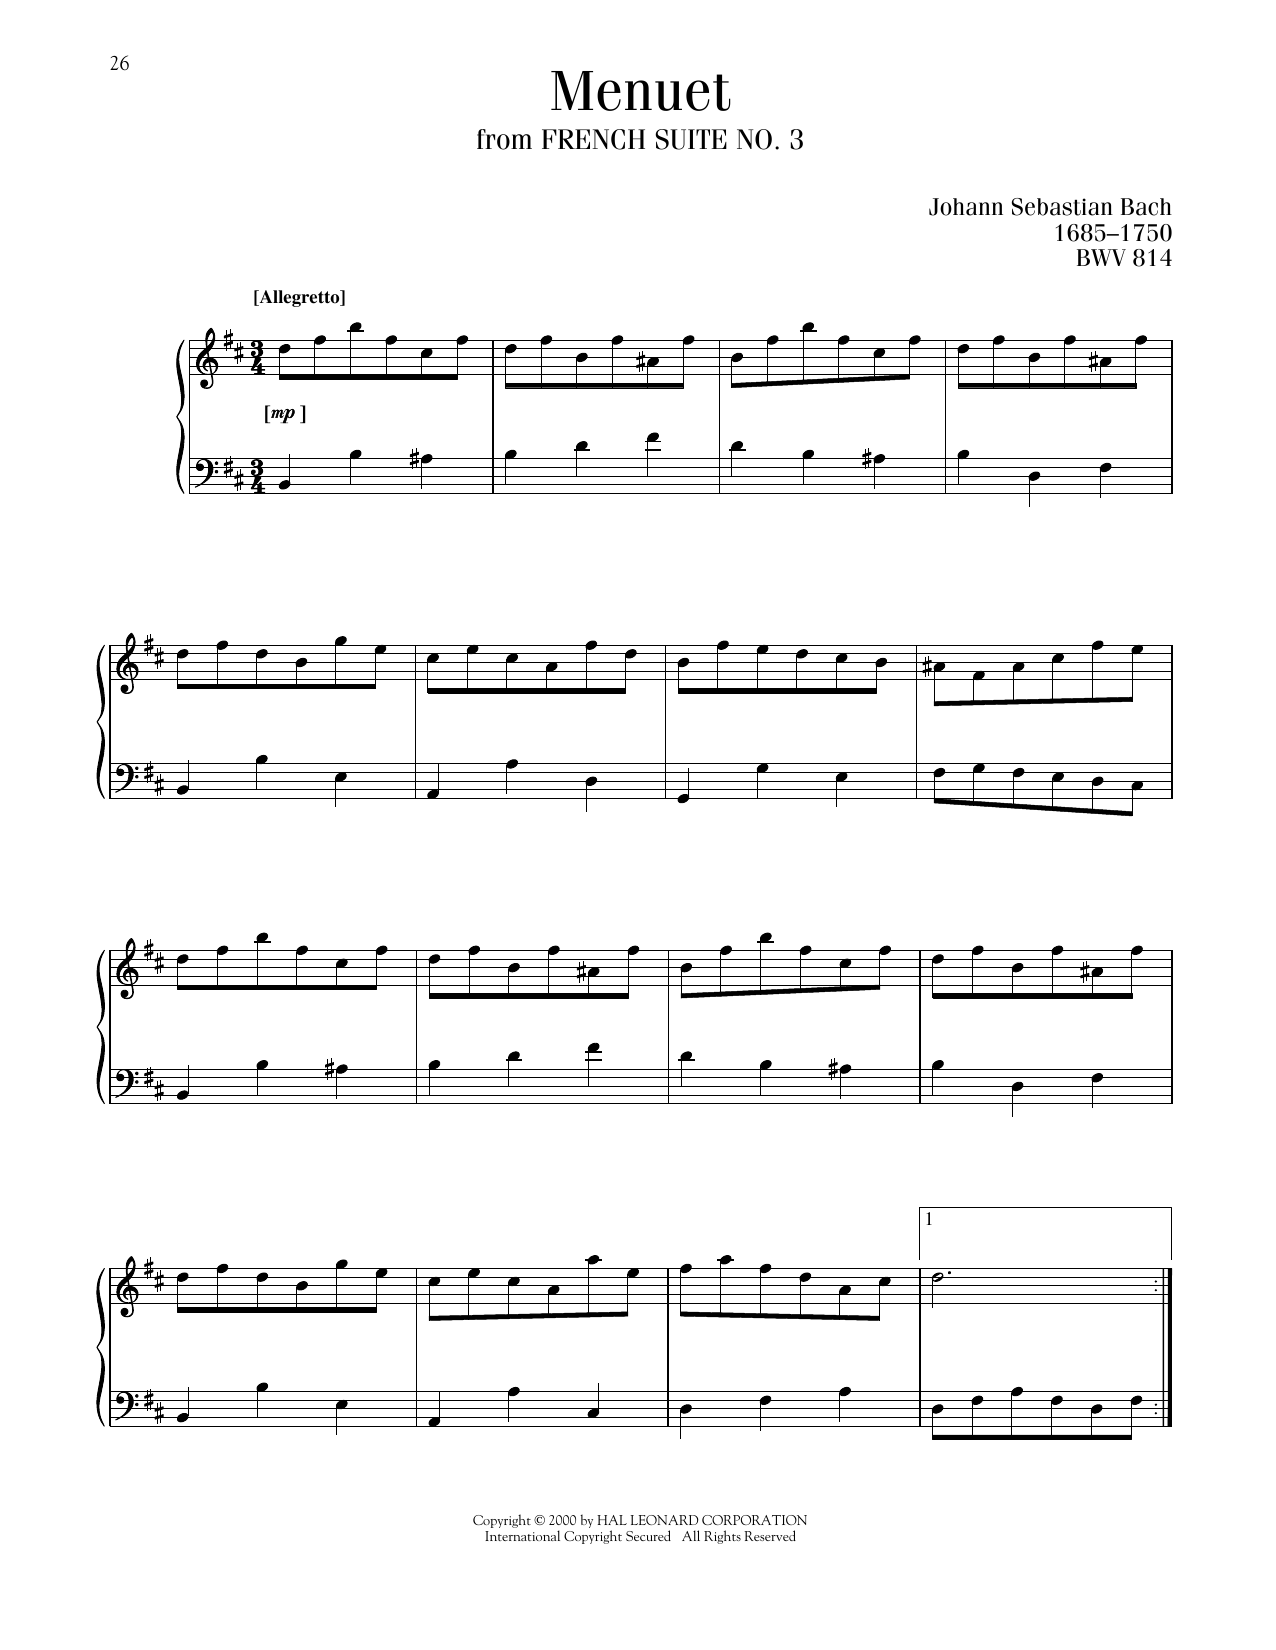 Johann Sebastian Bach Menuet I, BWV 814 Sheet Music Notes & Chords for Piano Solo - Download or Print PDF